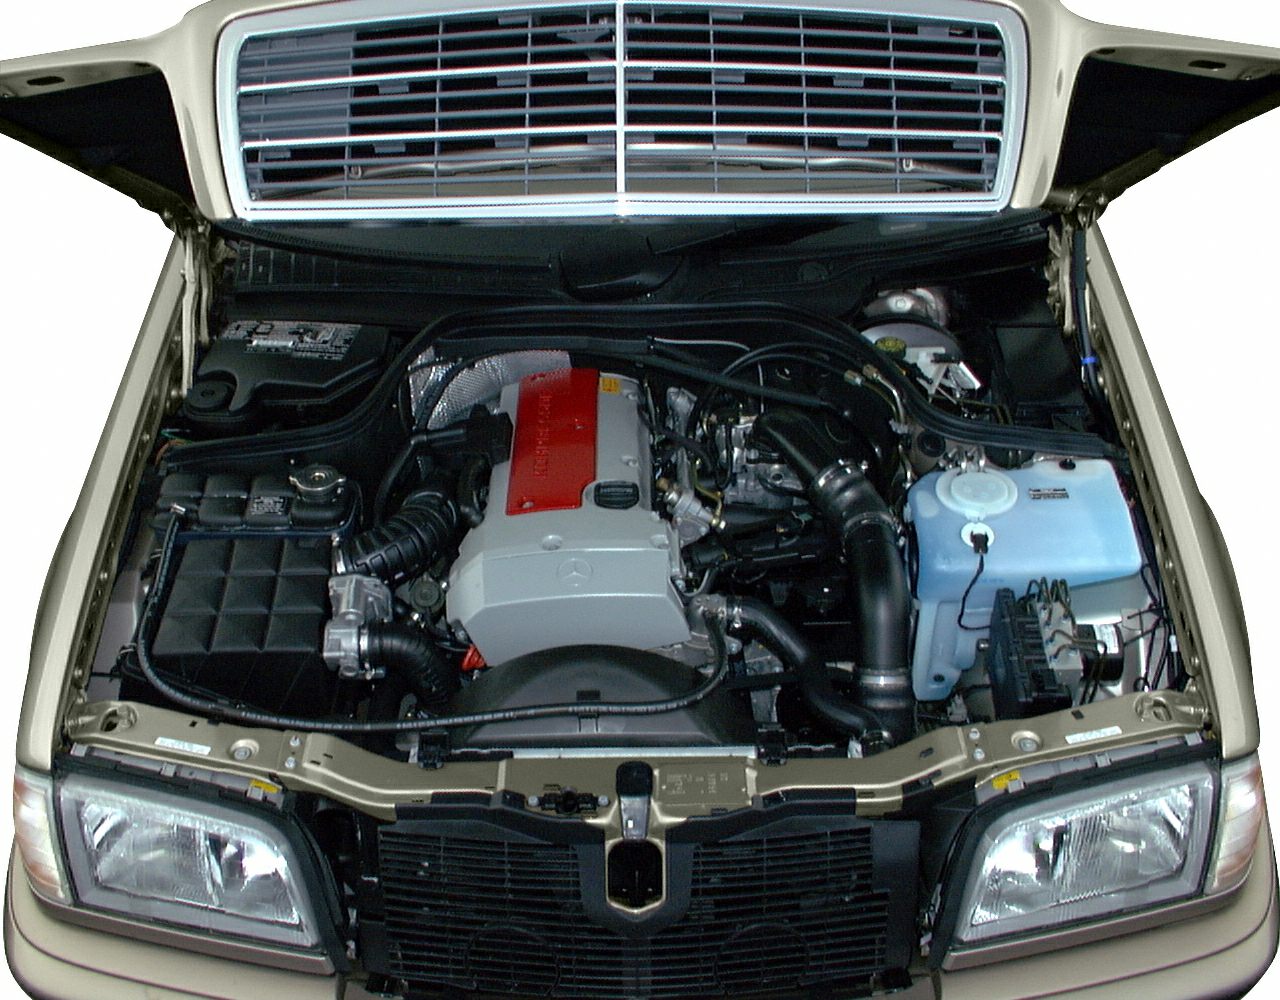 2004 mercedes c230 kompressor engine